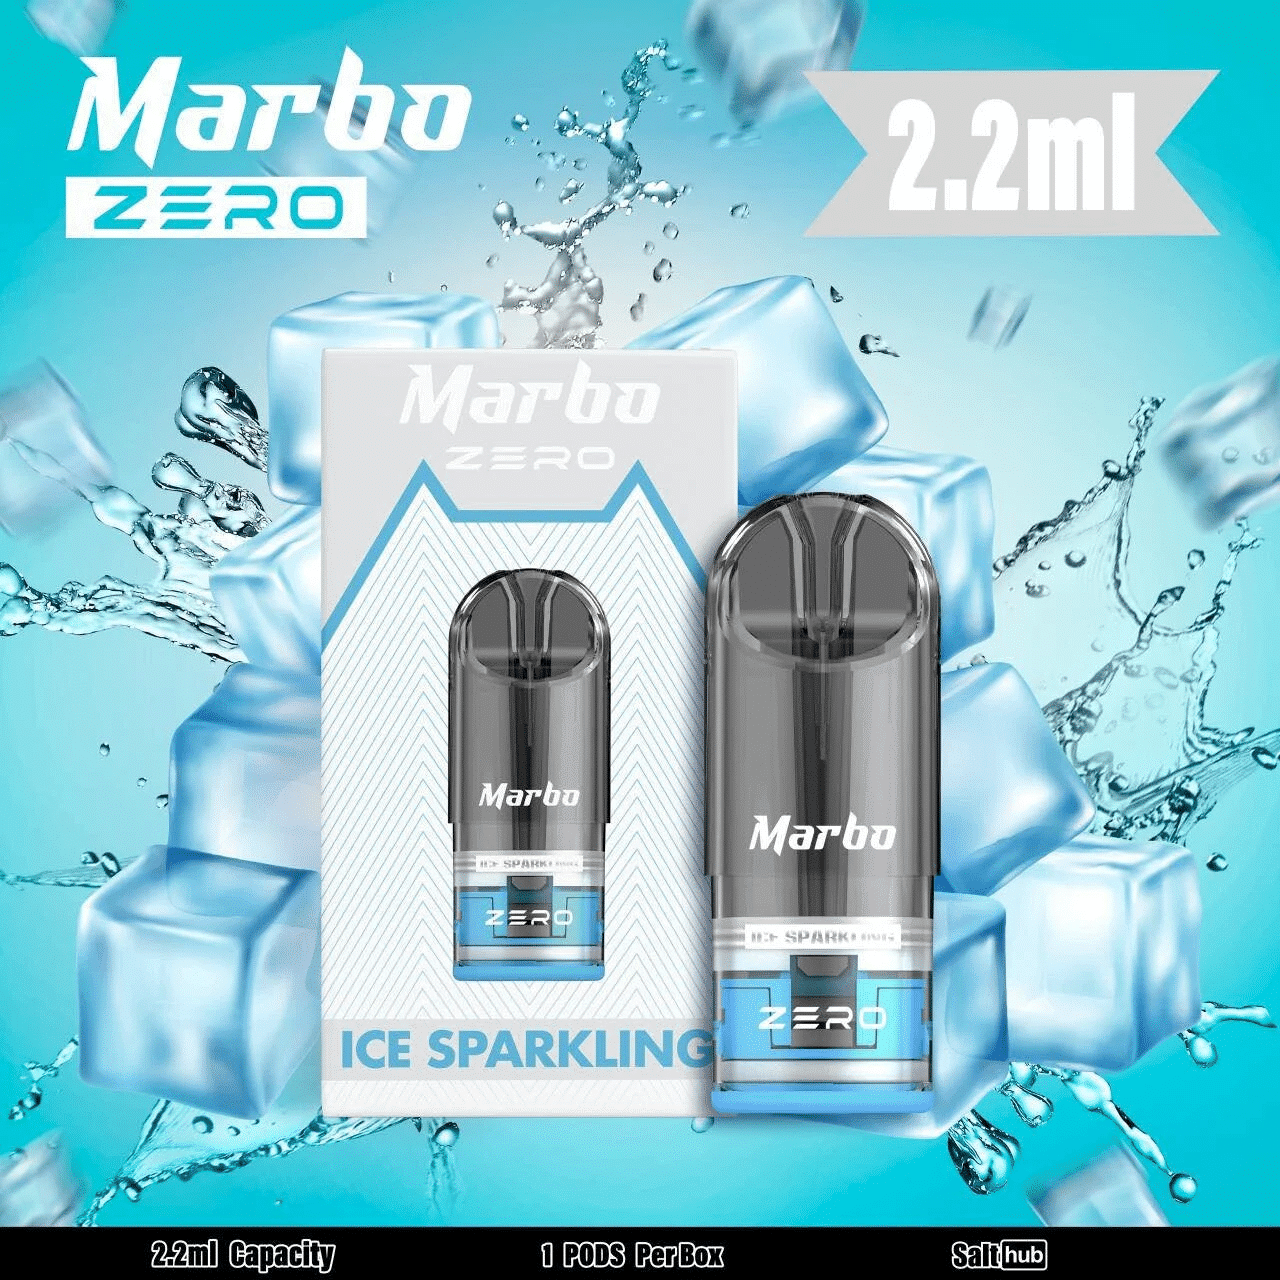 Marbo zero pod mineral water